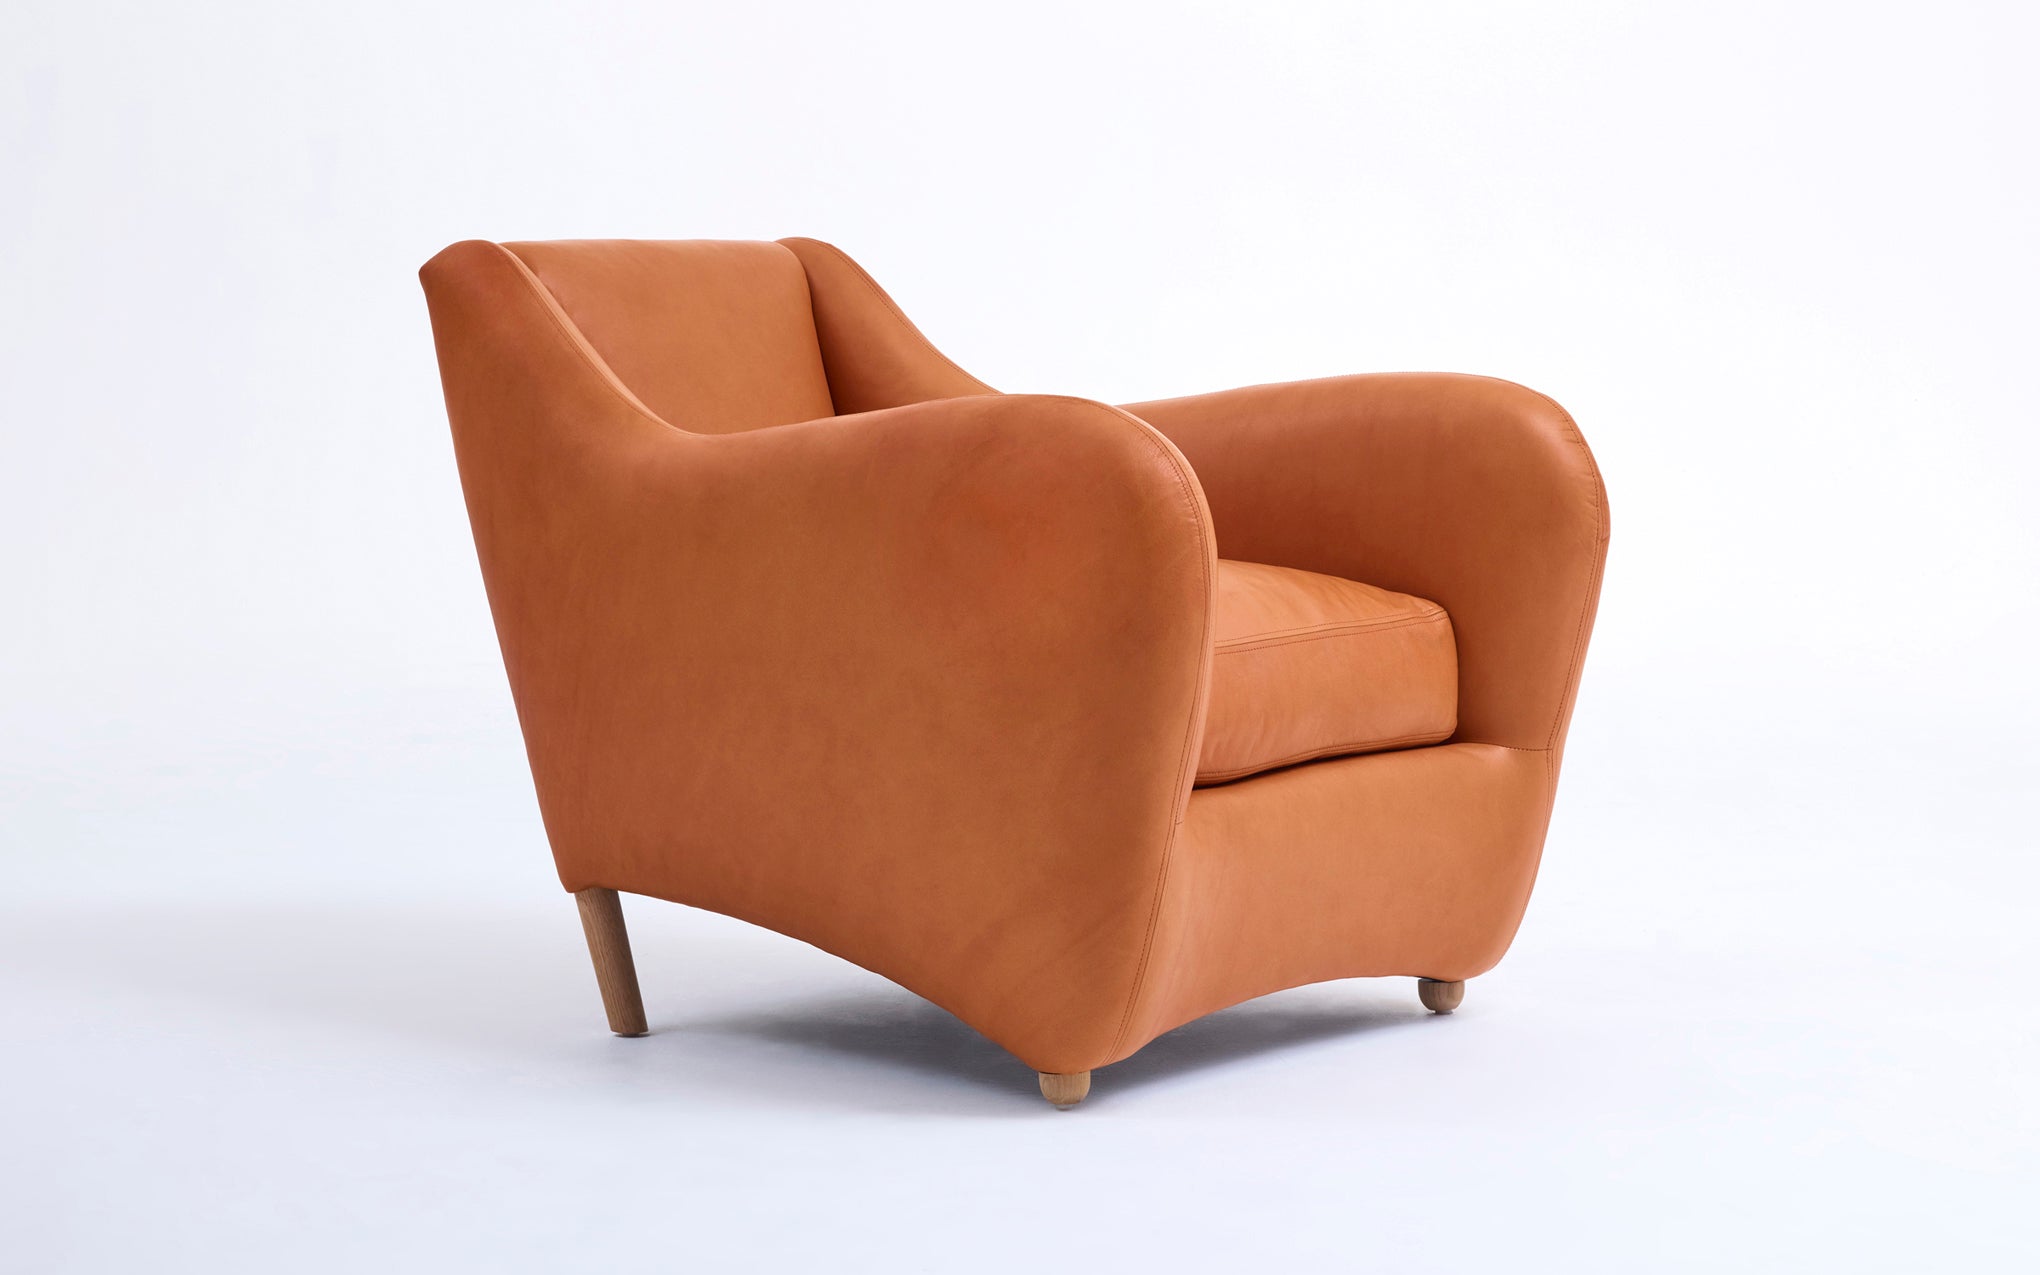 Balzac armchair by Matthew Hilston for SCP